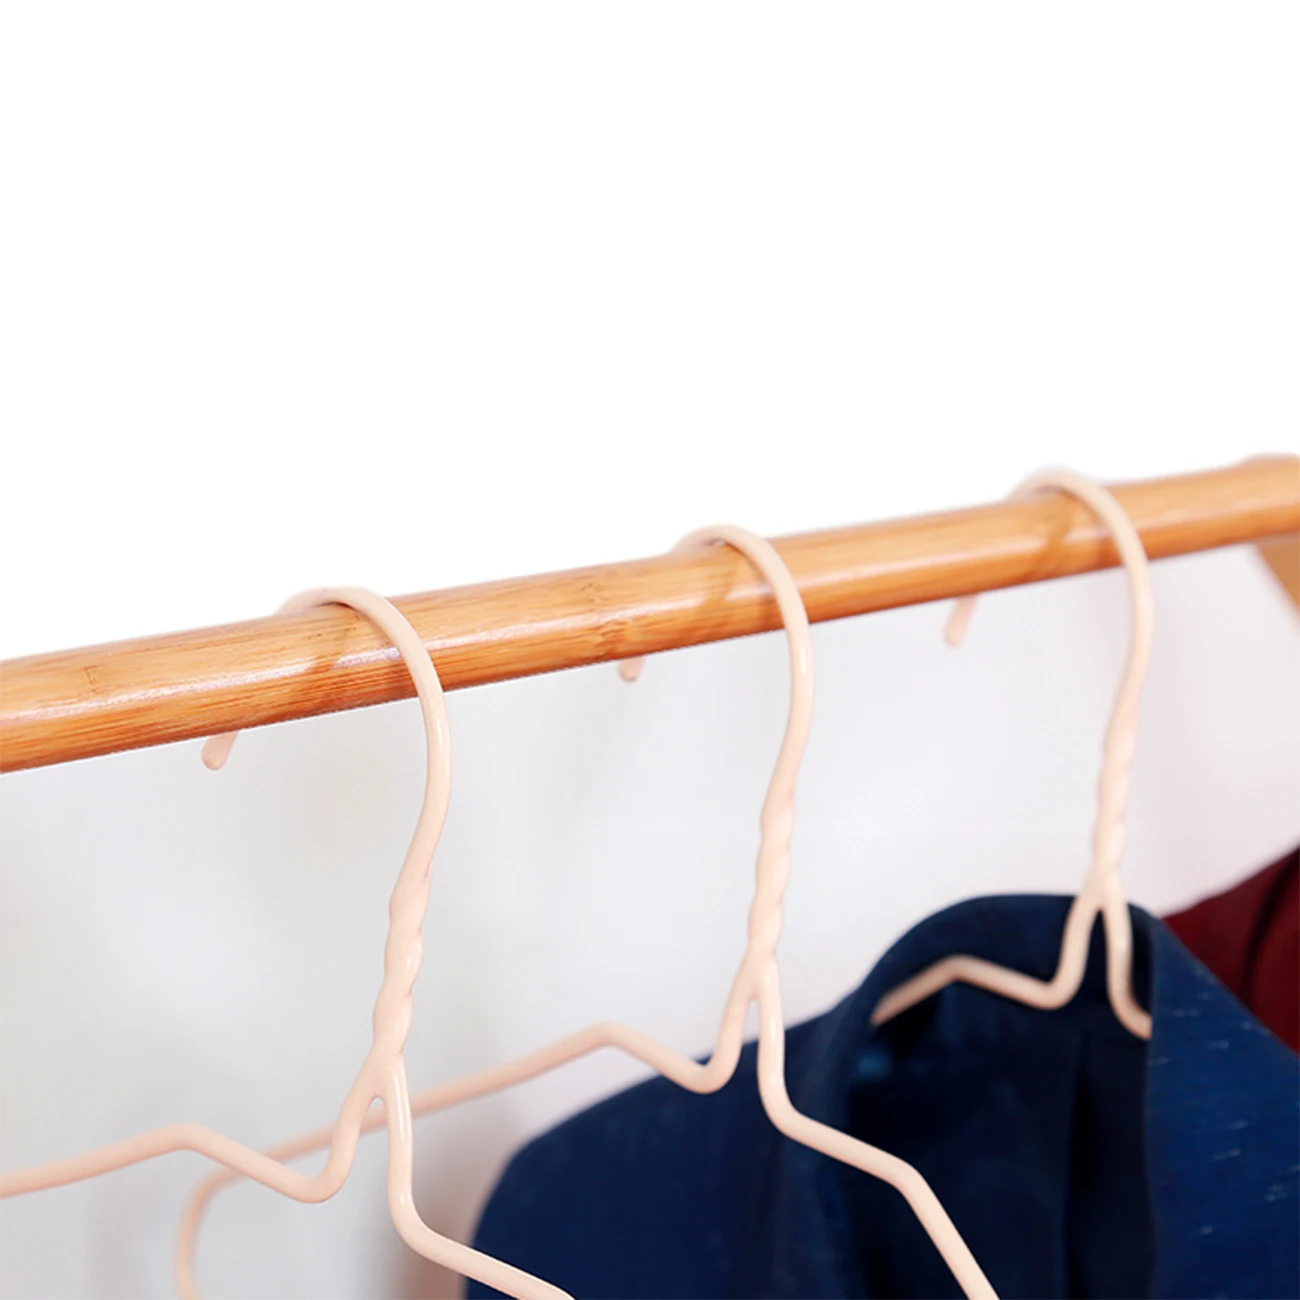 Coat Stand Bamboo Garment Clothes Hanging Rail 6 Hooks Shoe Rack Hat Hanger Laundry Storage Shelves